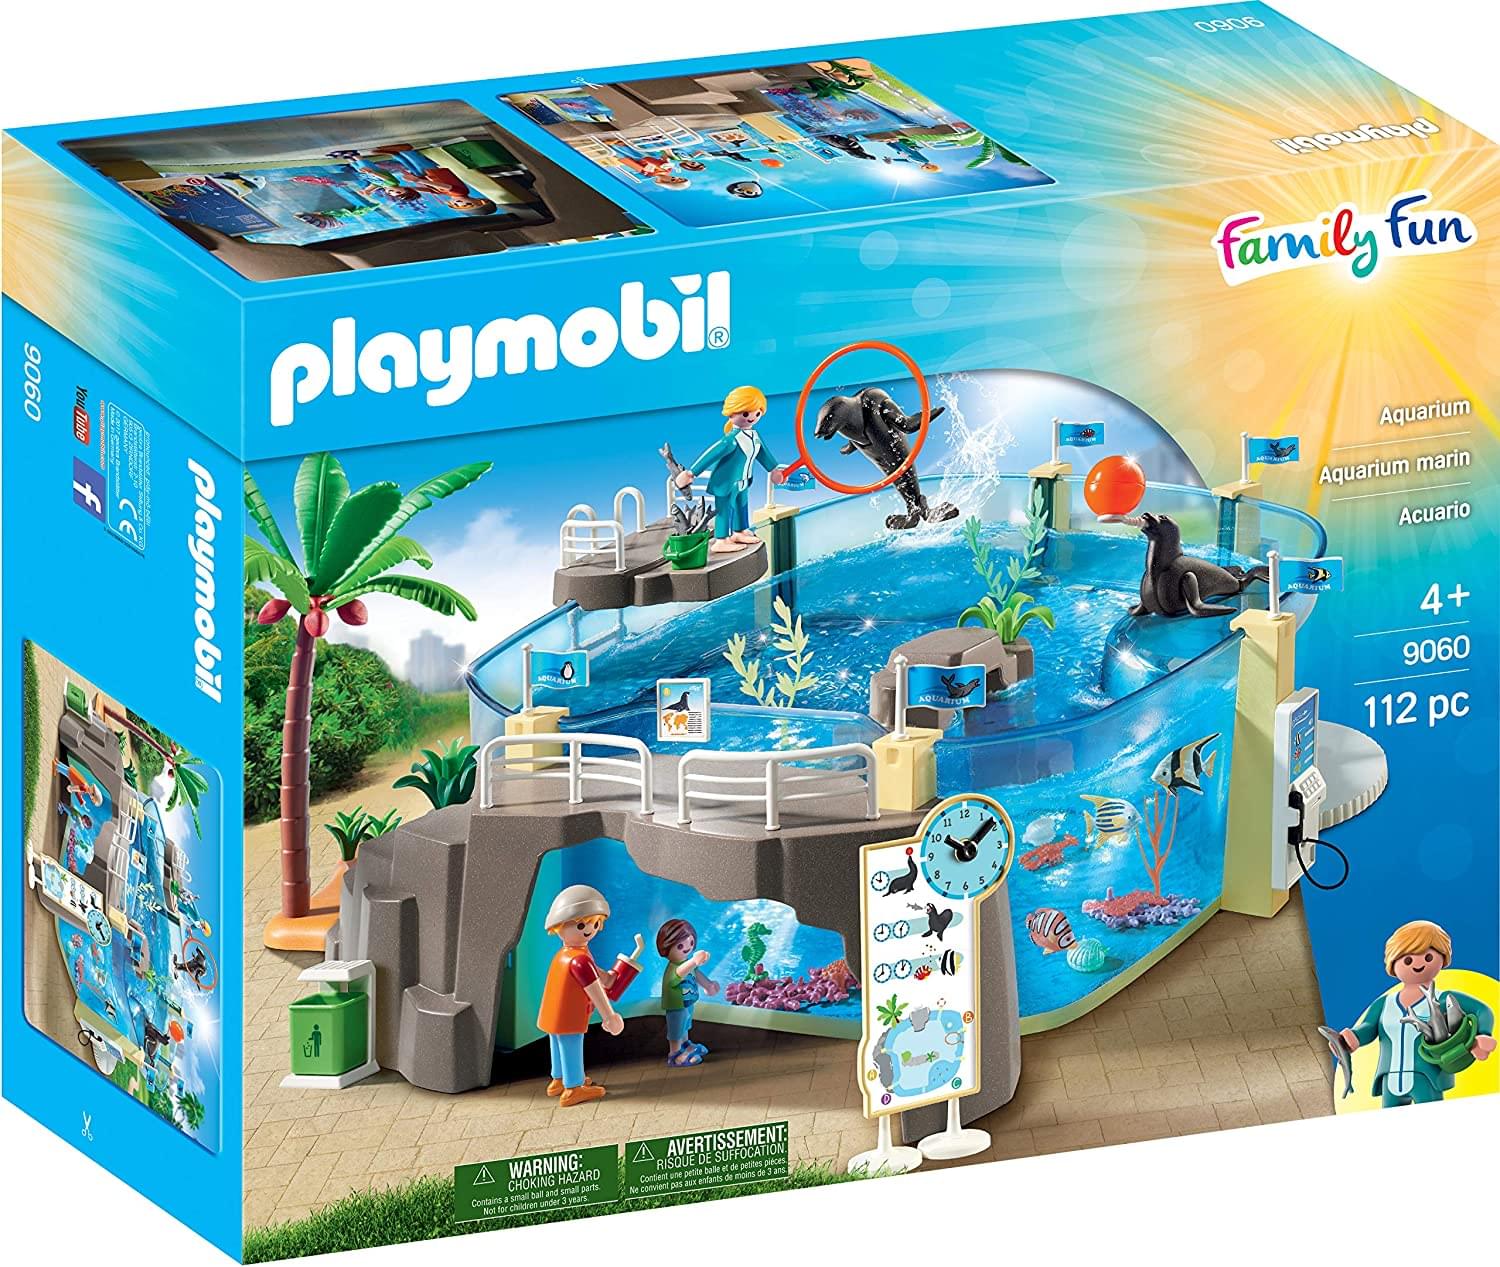 Playmobil 9060 Aquarium Building Set, 112 Pieces